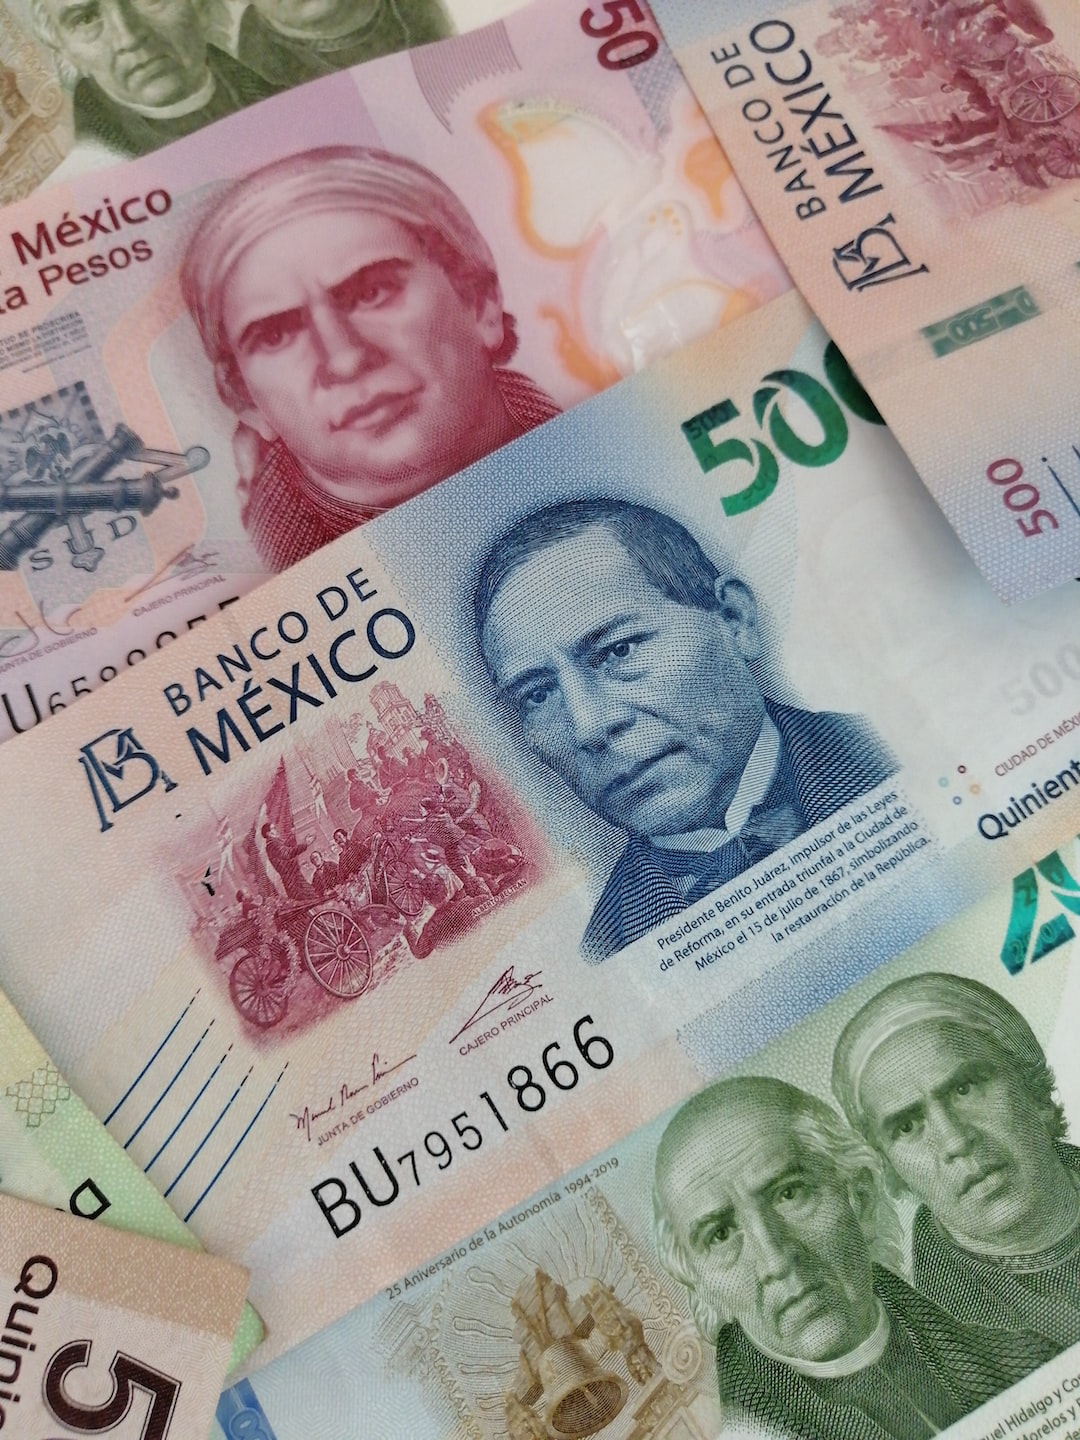 Imagen de billetes mexicanos.